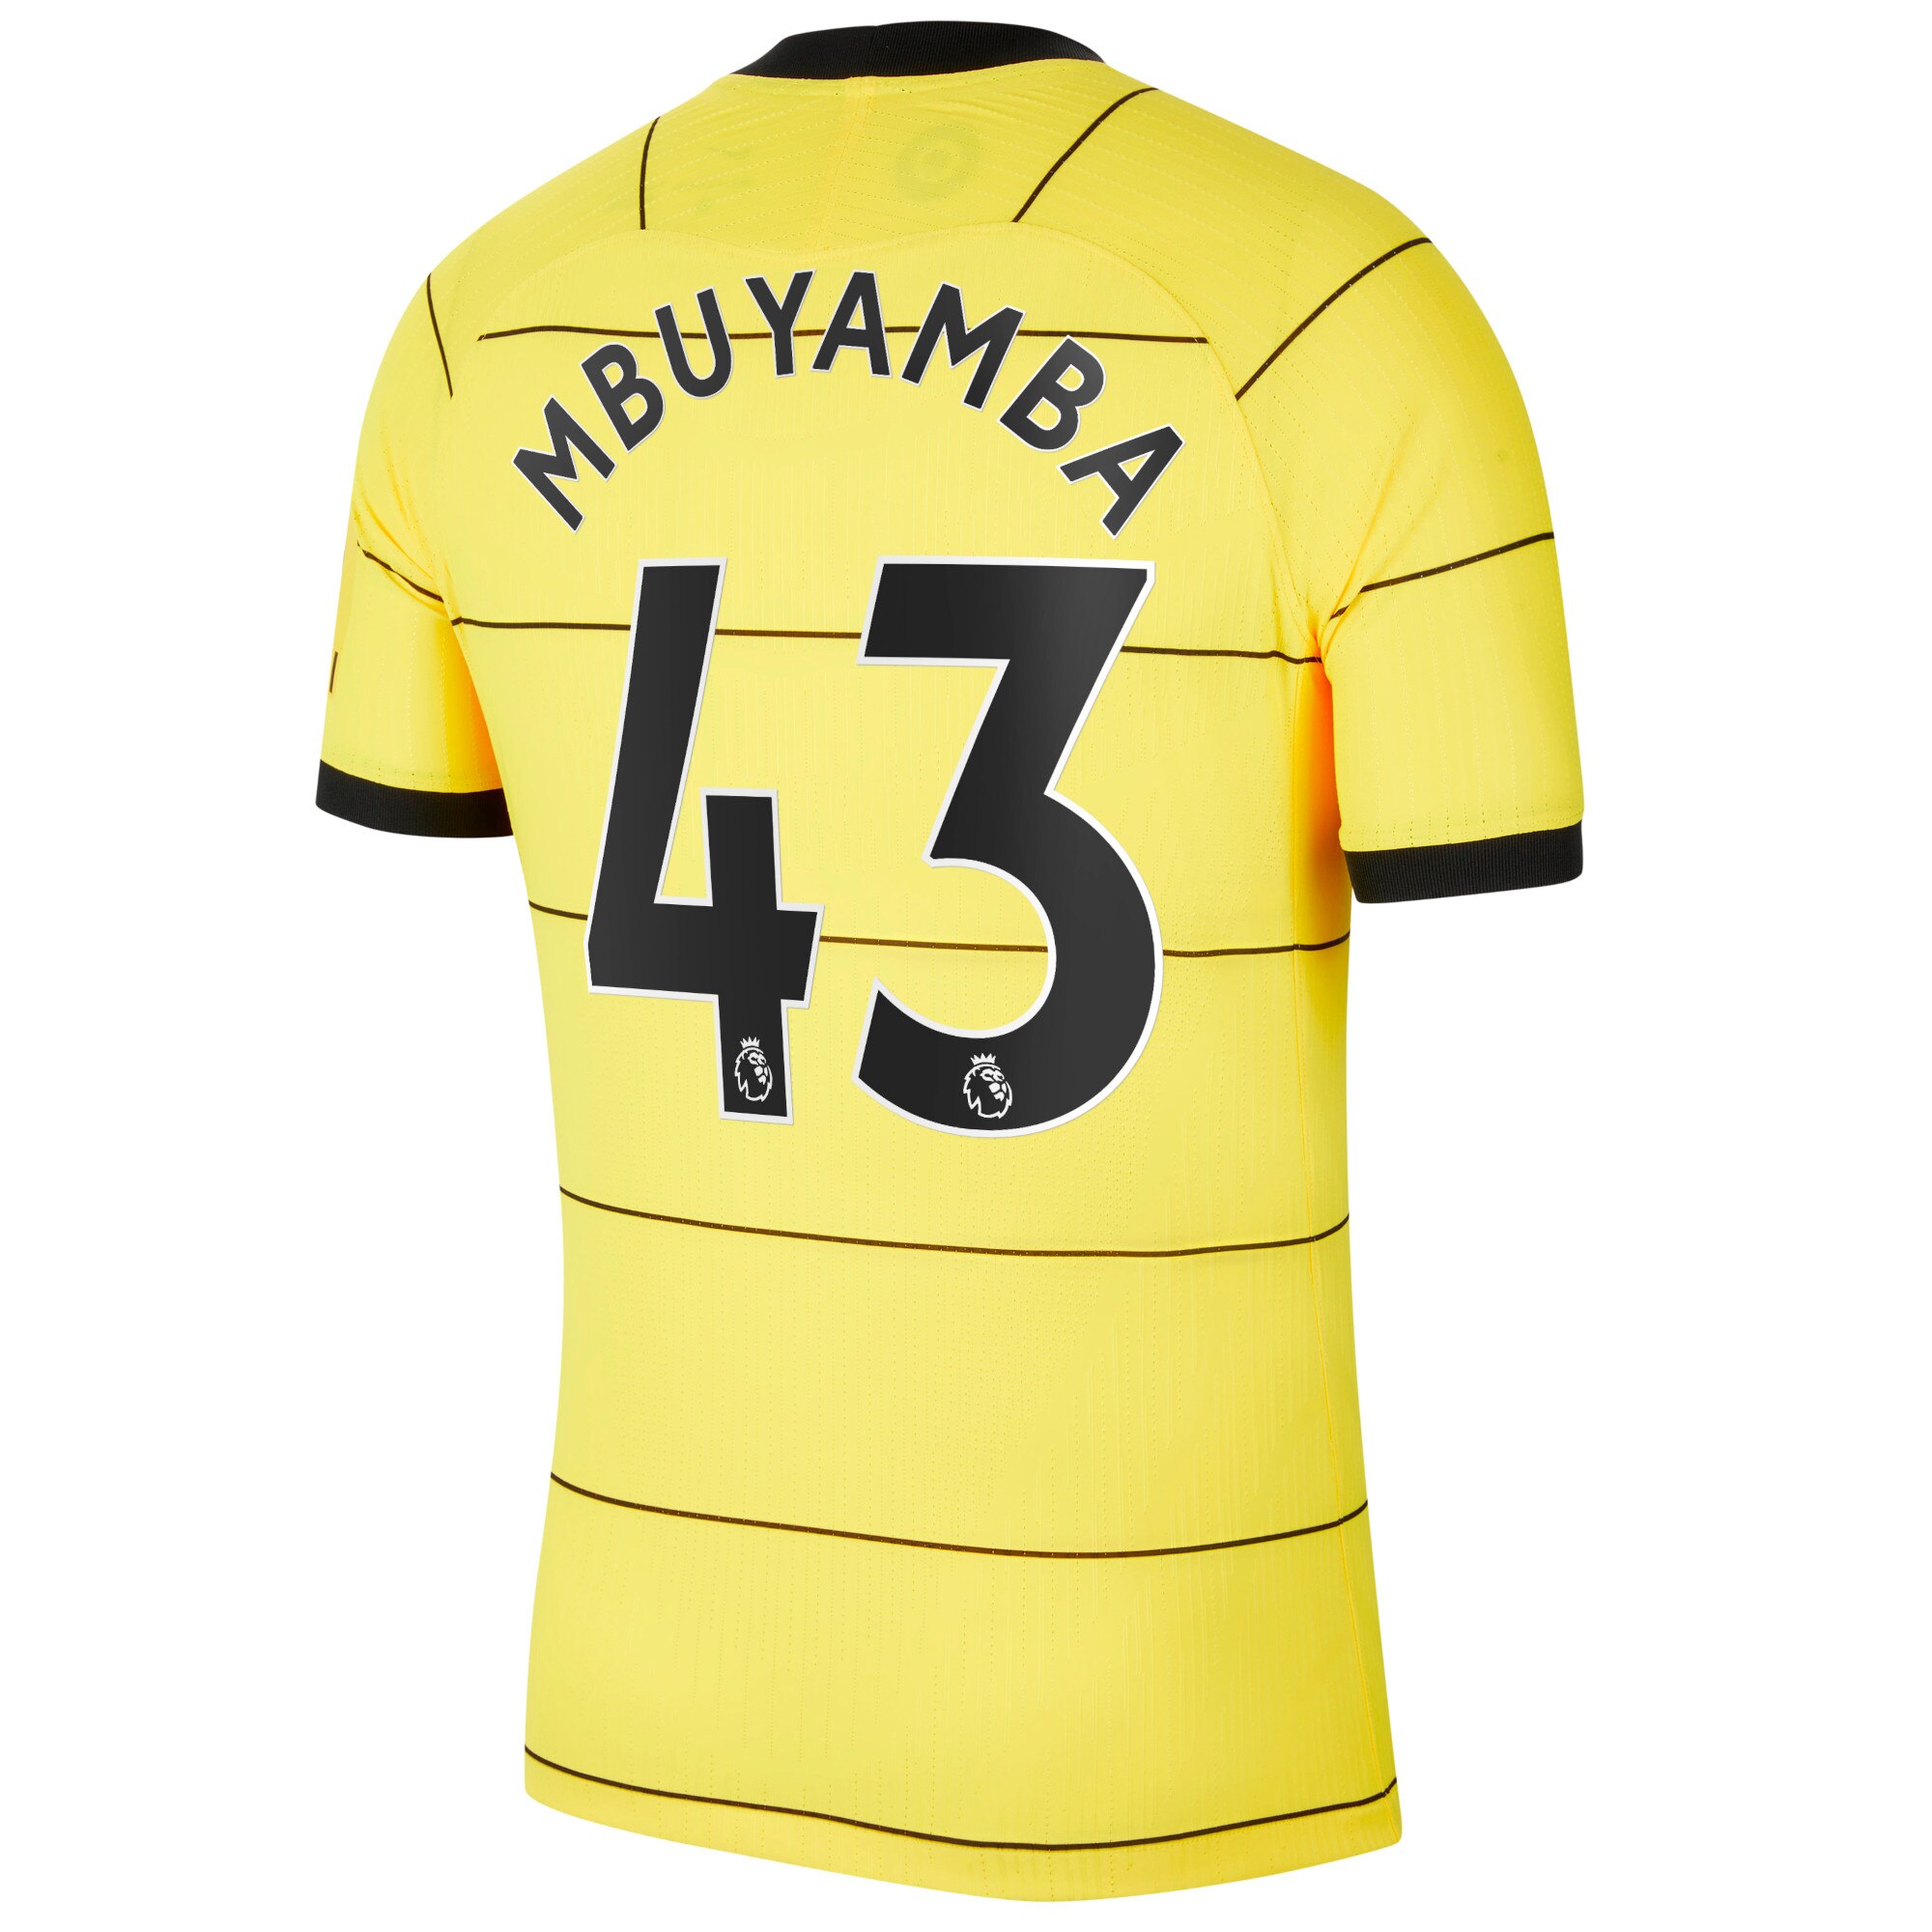 Chelsea Away Vapor Match Shirt 2021-22 with Mbuyamba 43 printing